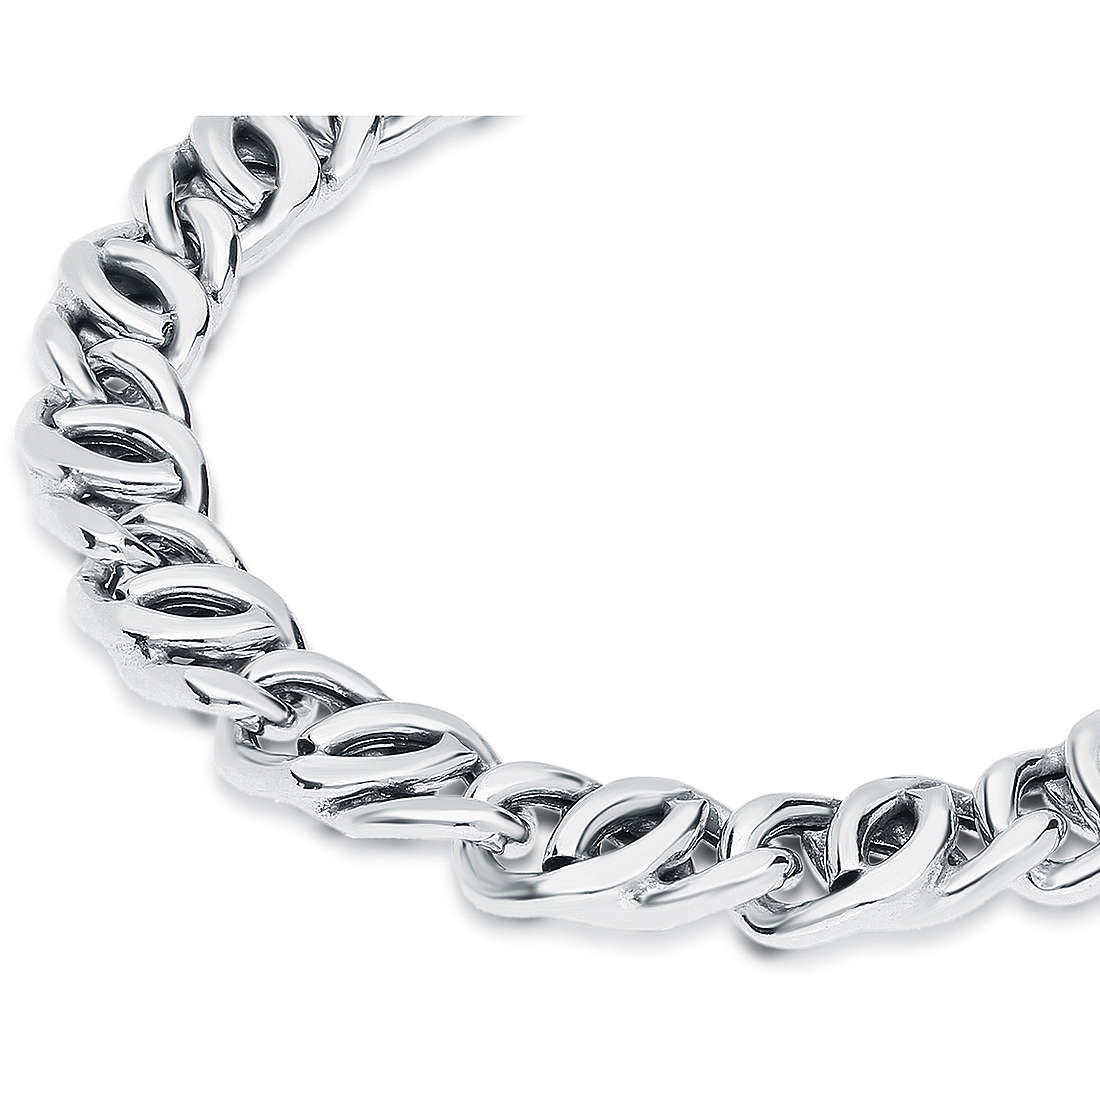 bracelet man Chain 925 Silver jewel GioiaPura lbOPV180MR-B